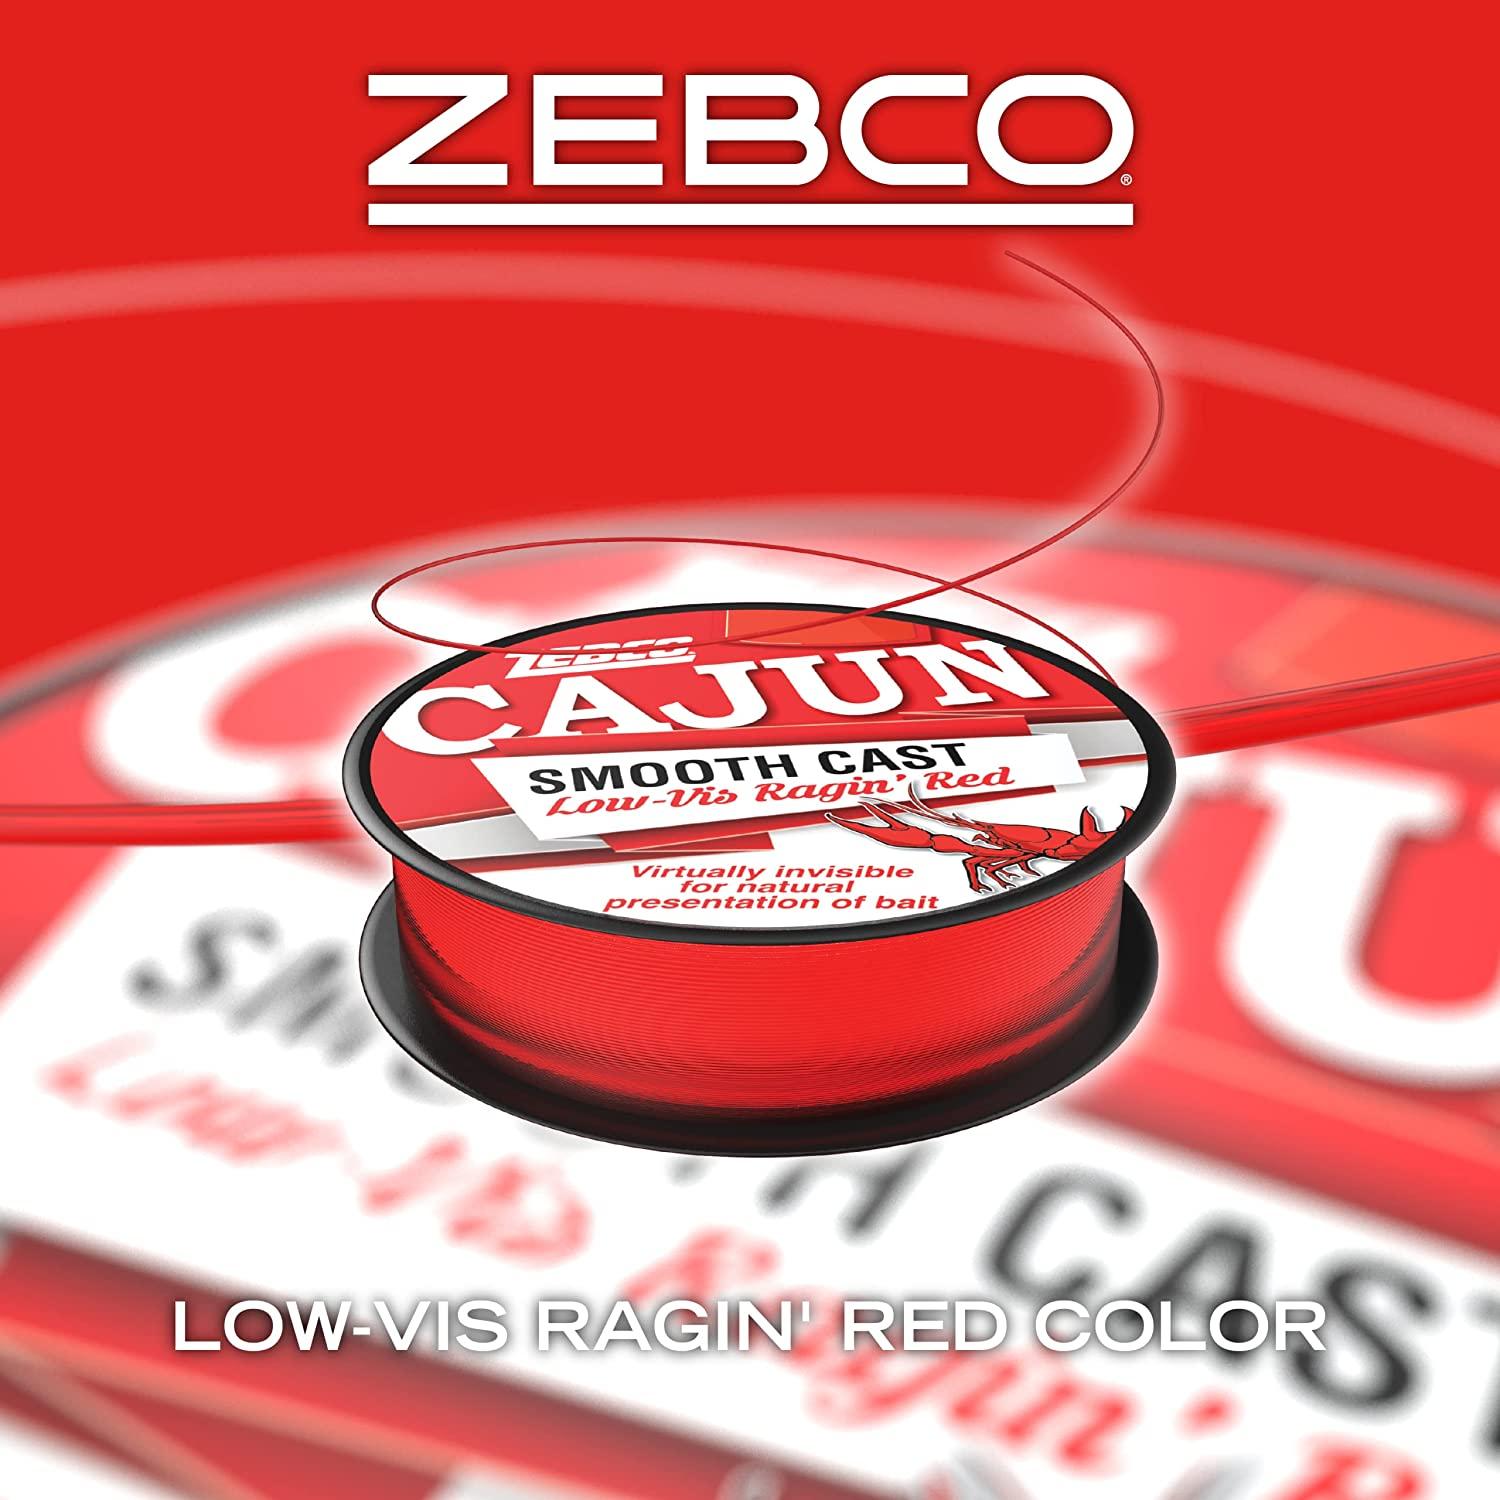 Zebco Cajun Line Smooth Cast Fishing Line Low Vis Ragin Red Quarter Pound  Spool 1450-yard10-pound